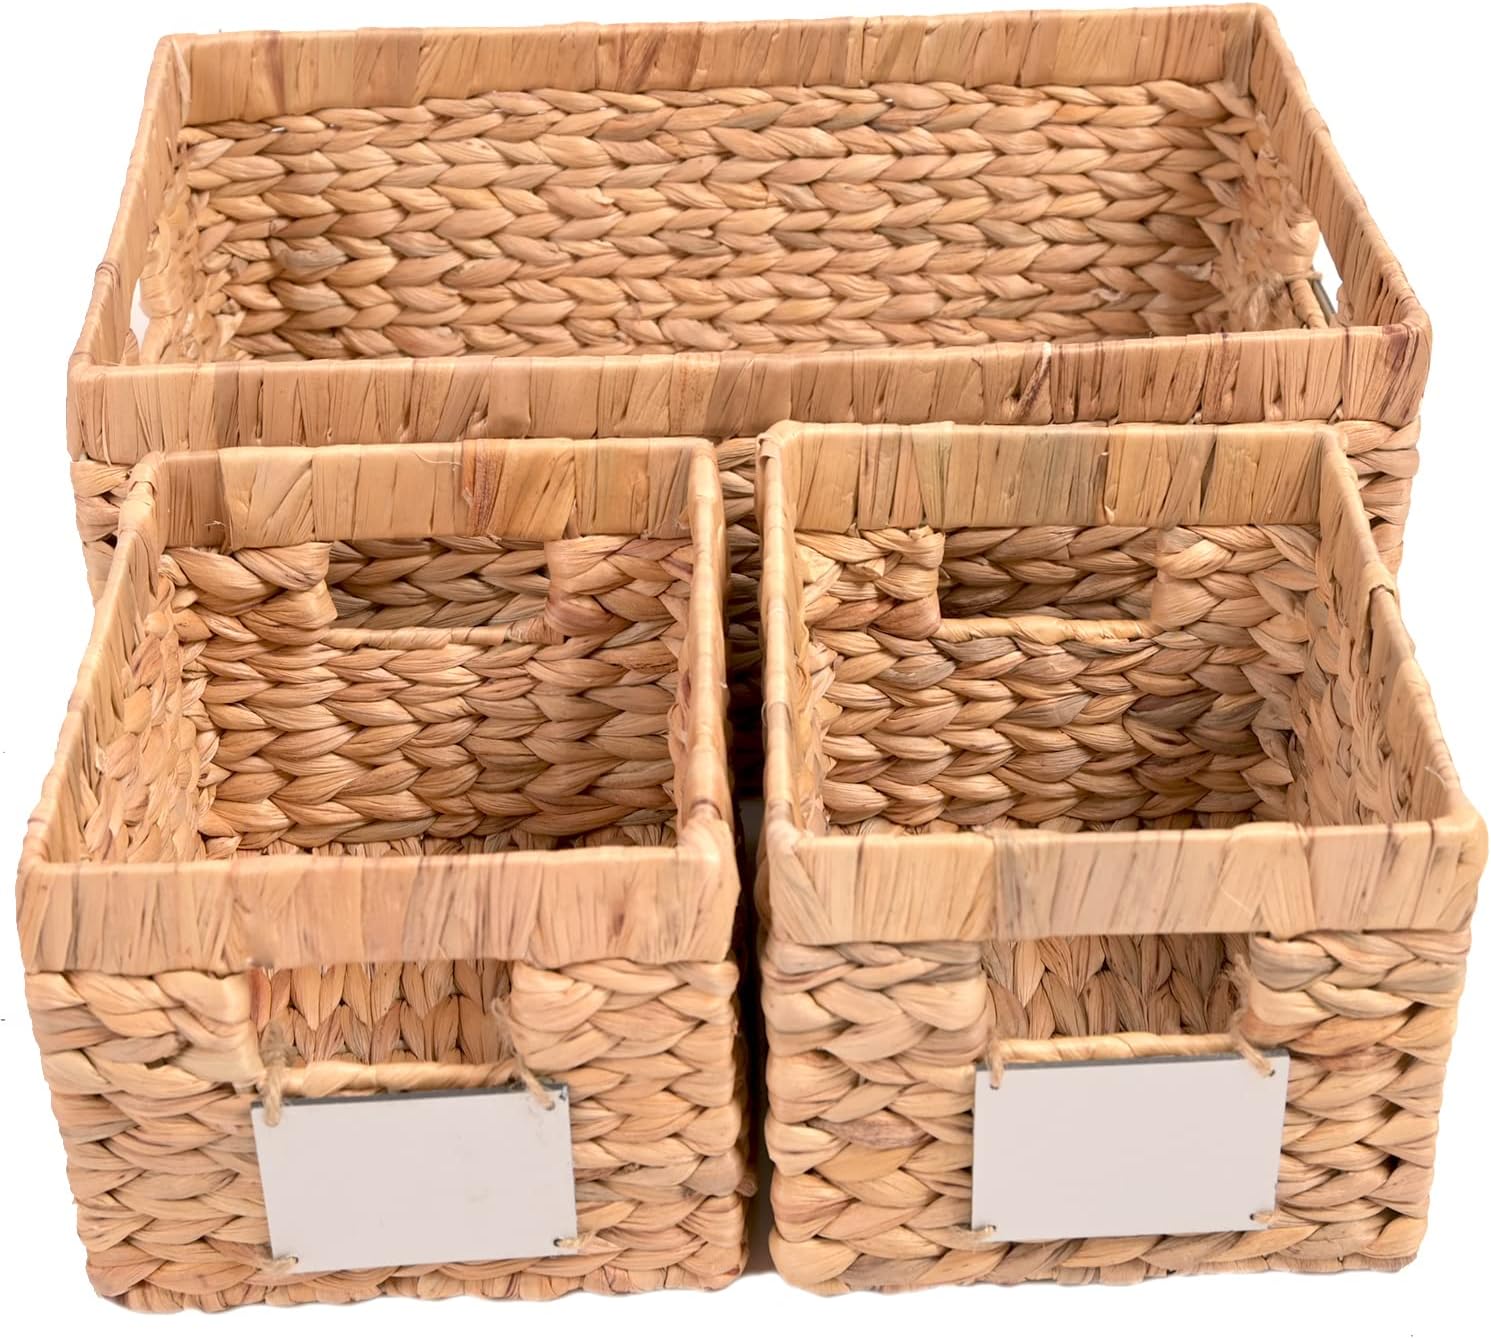 Pantry Storage Baskets